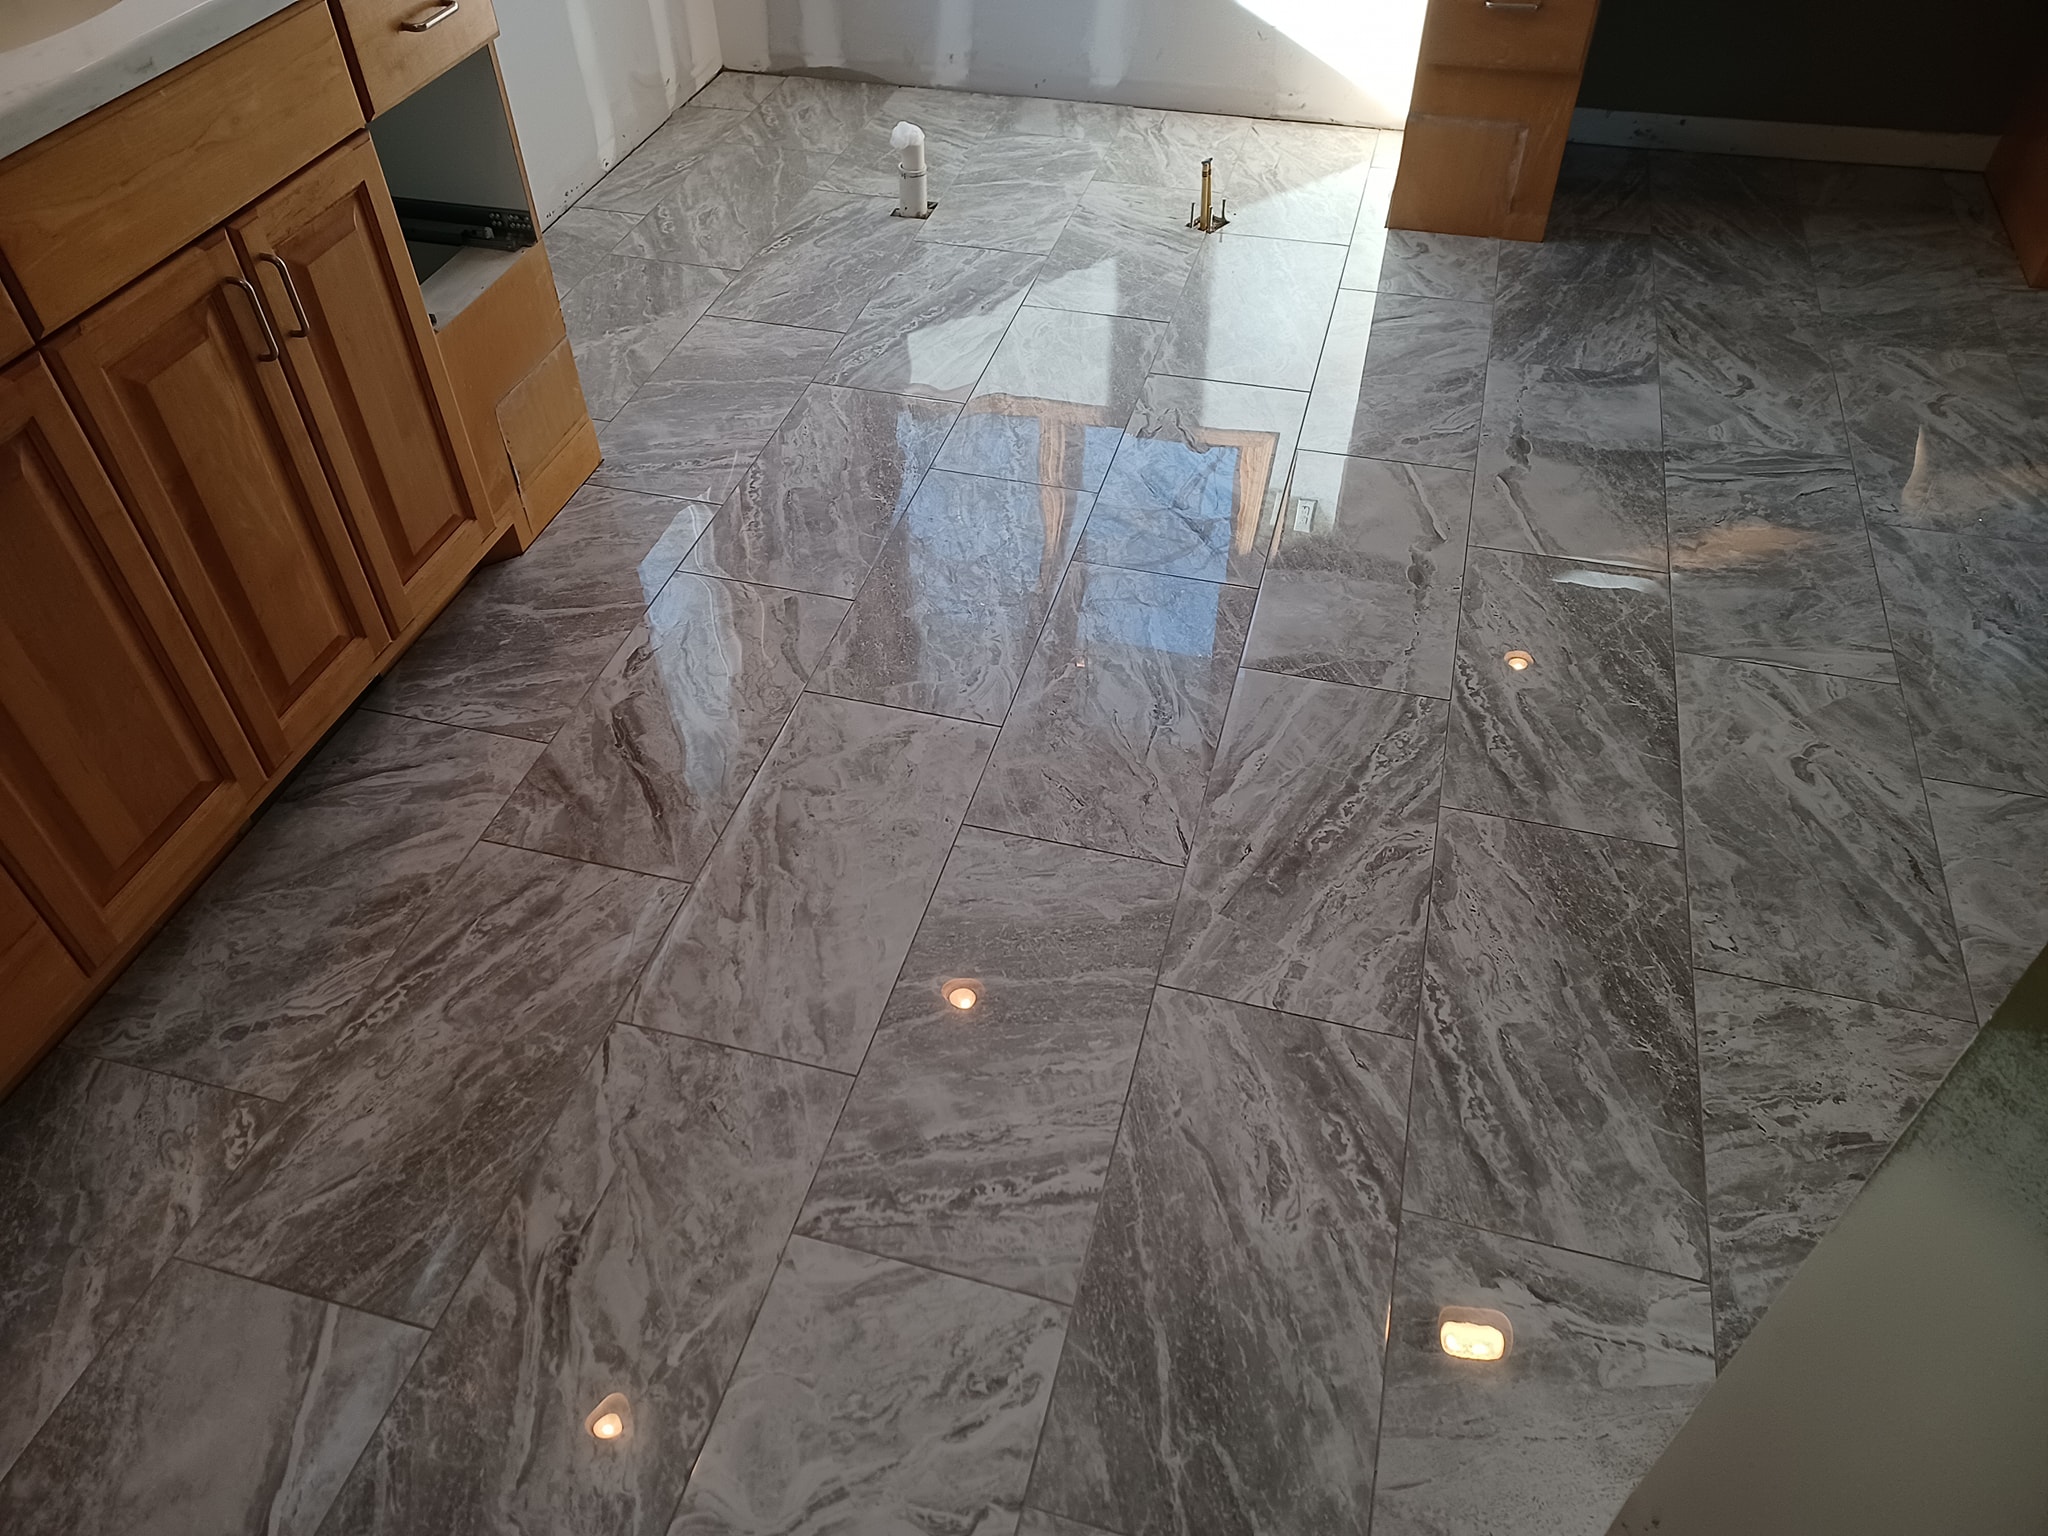 r323-bathroom-floor-tile.jpeg